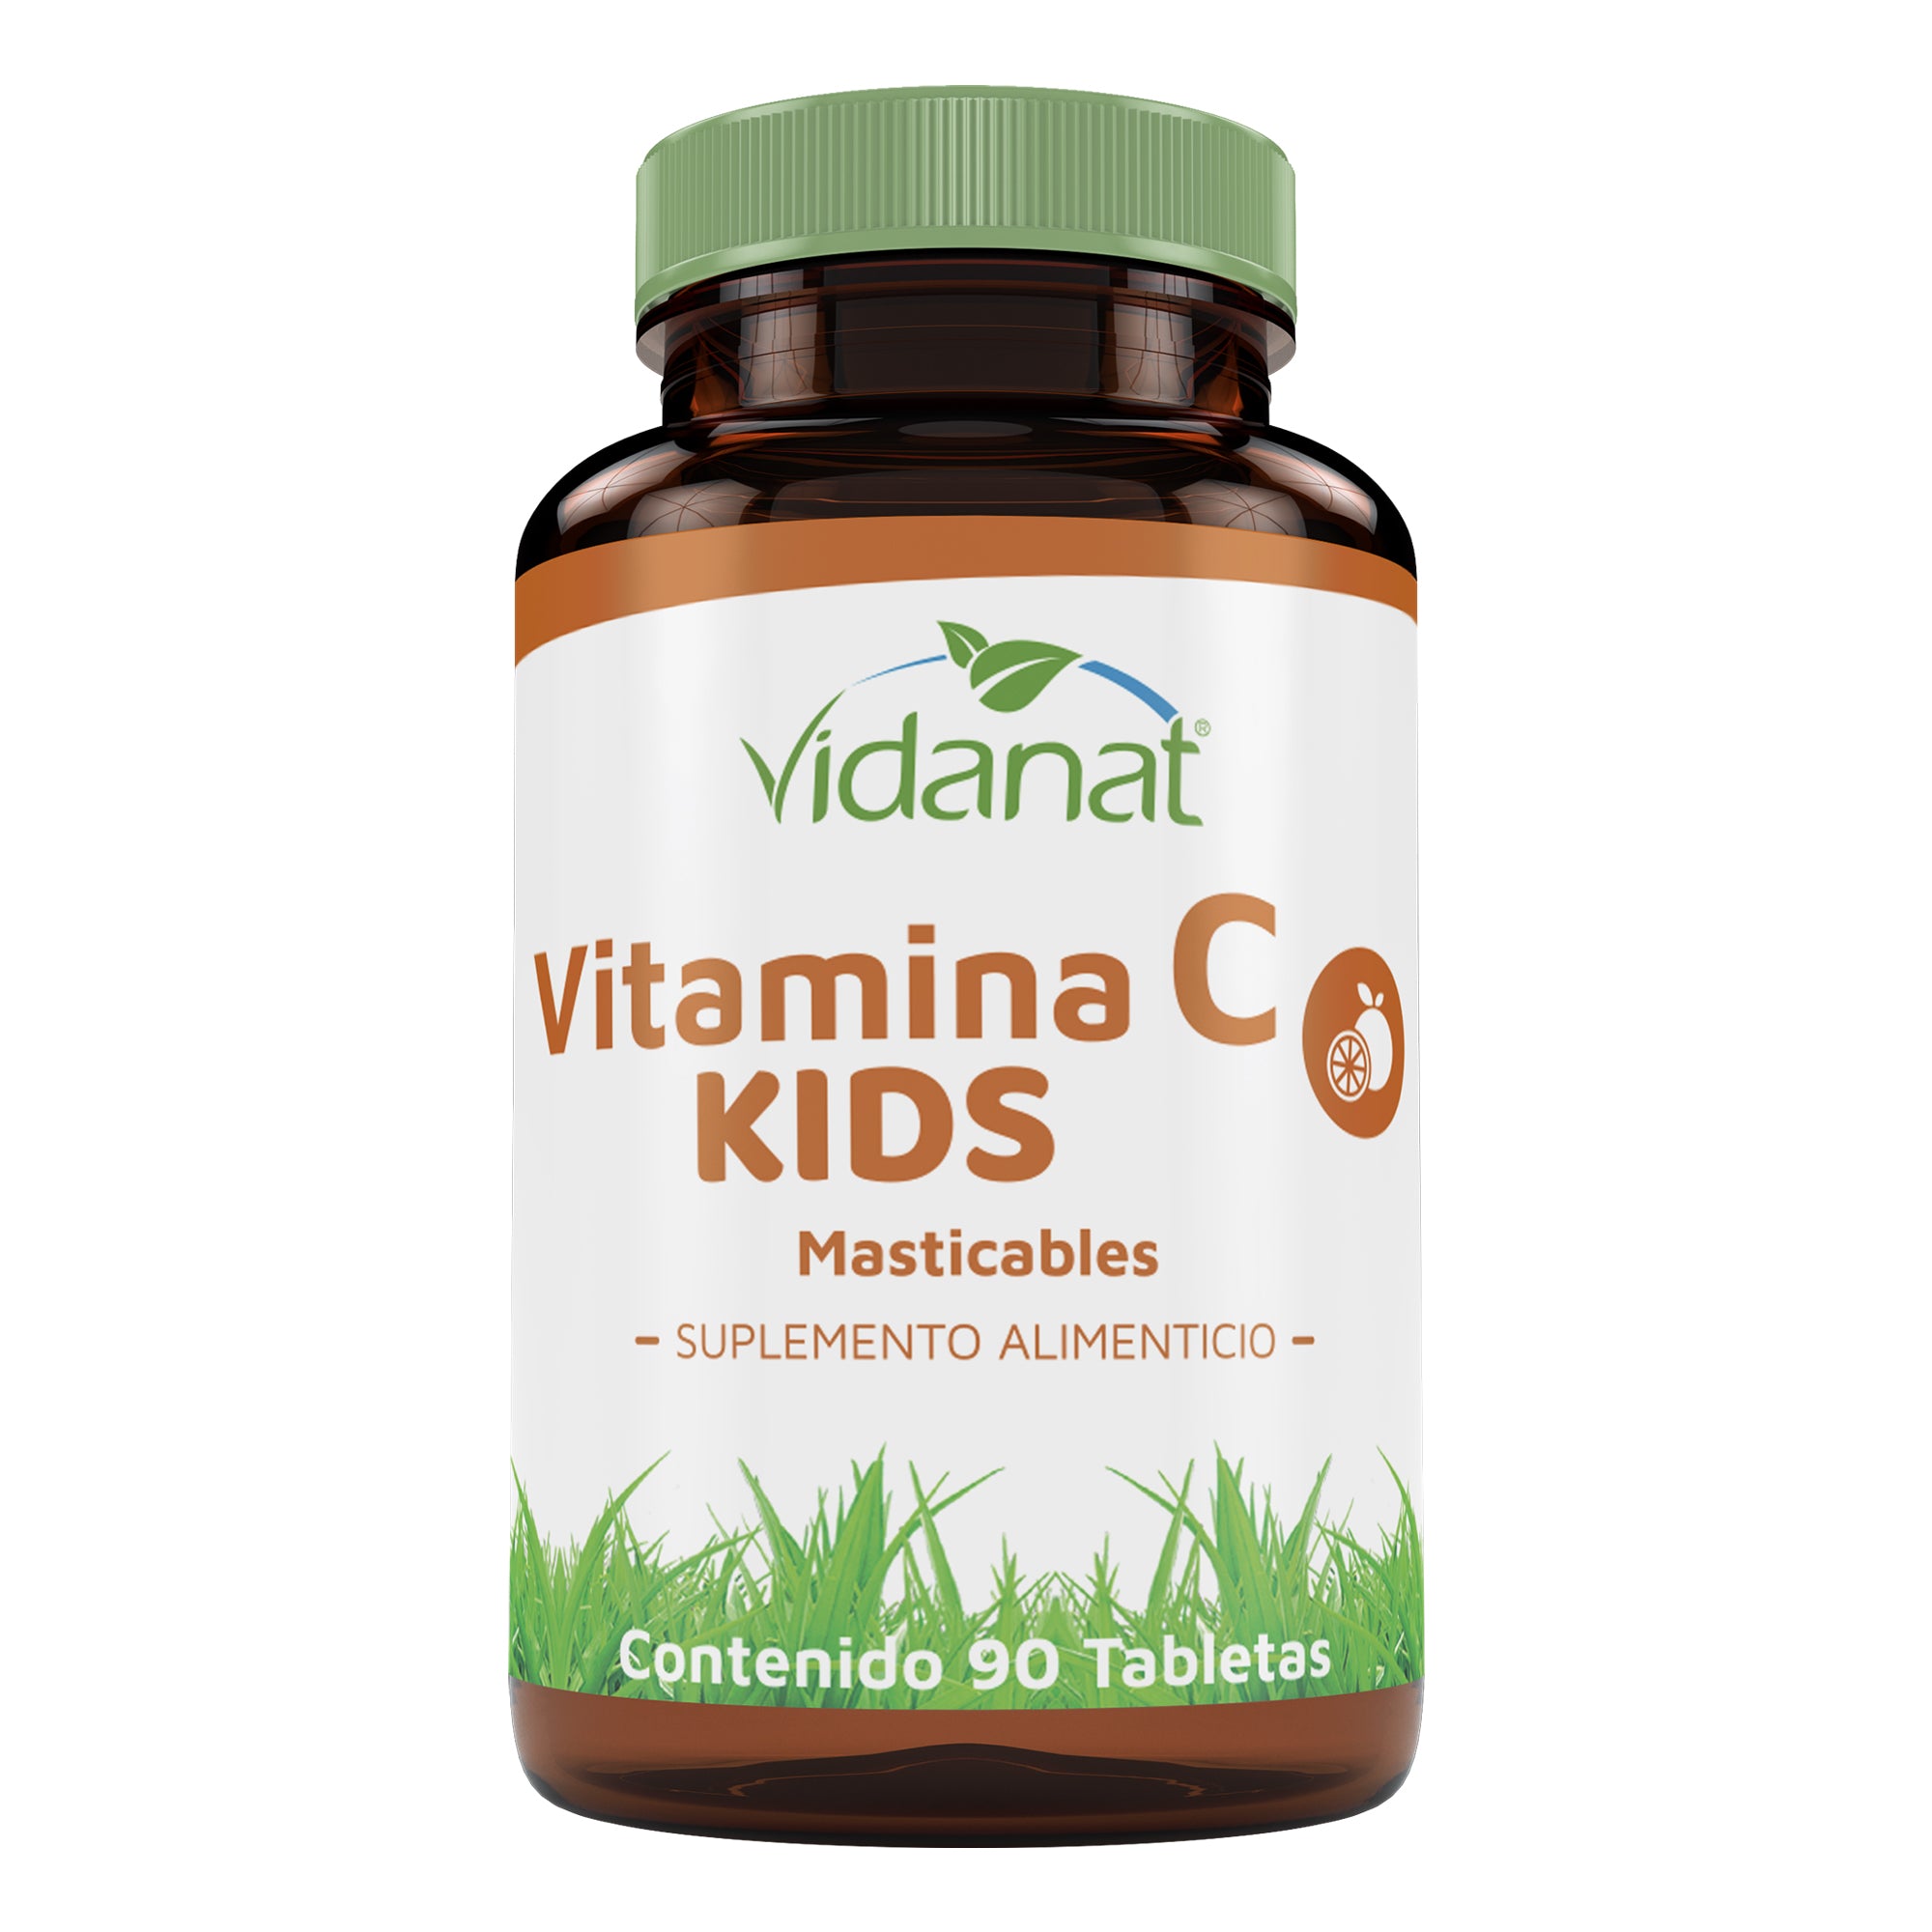 Vitamina c kids 90 tab masticables